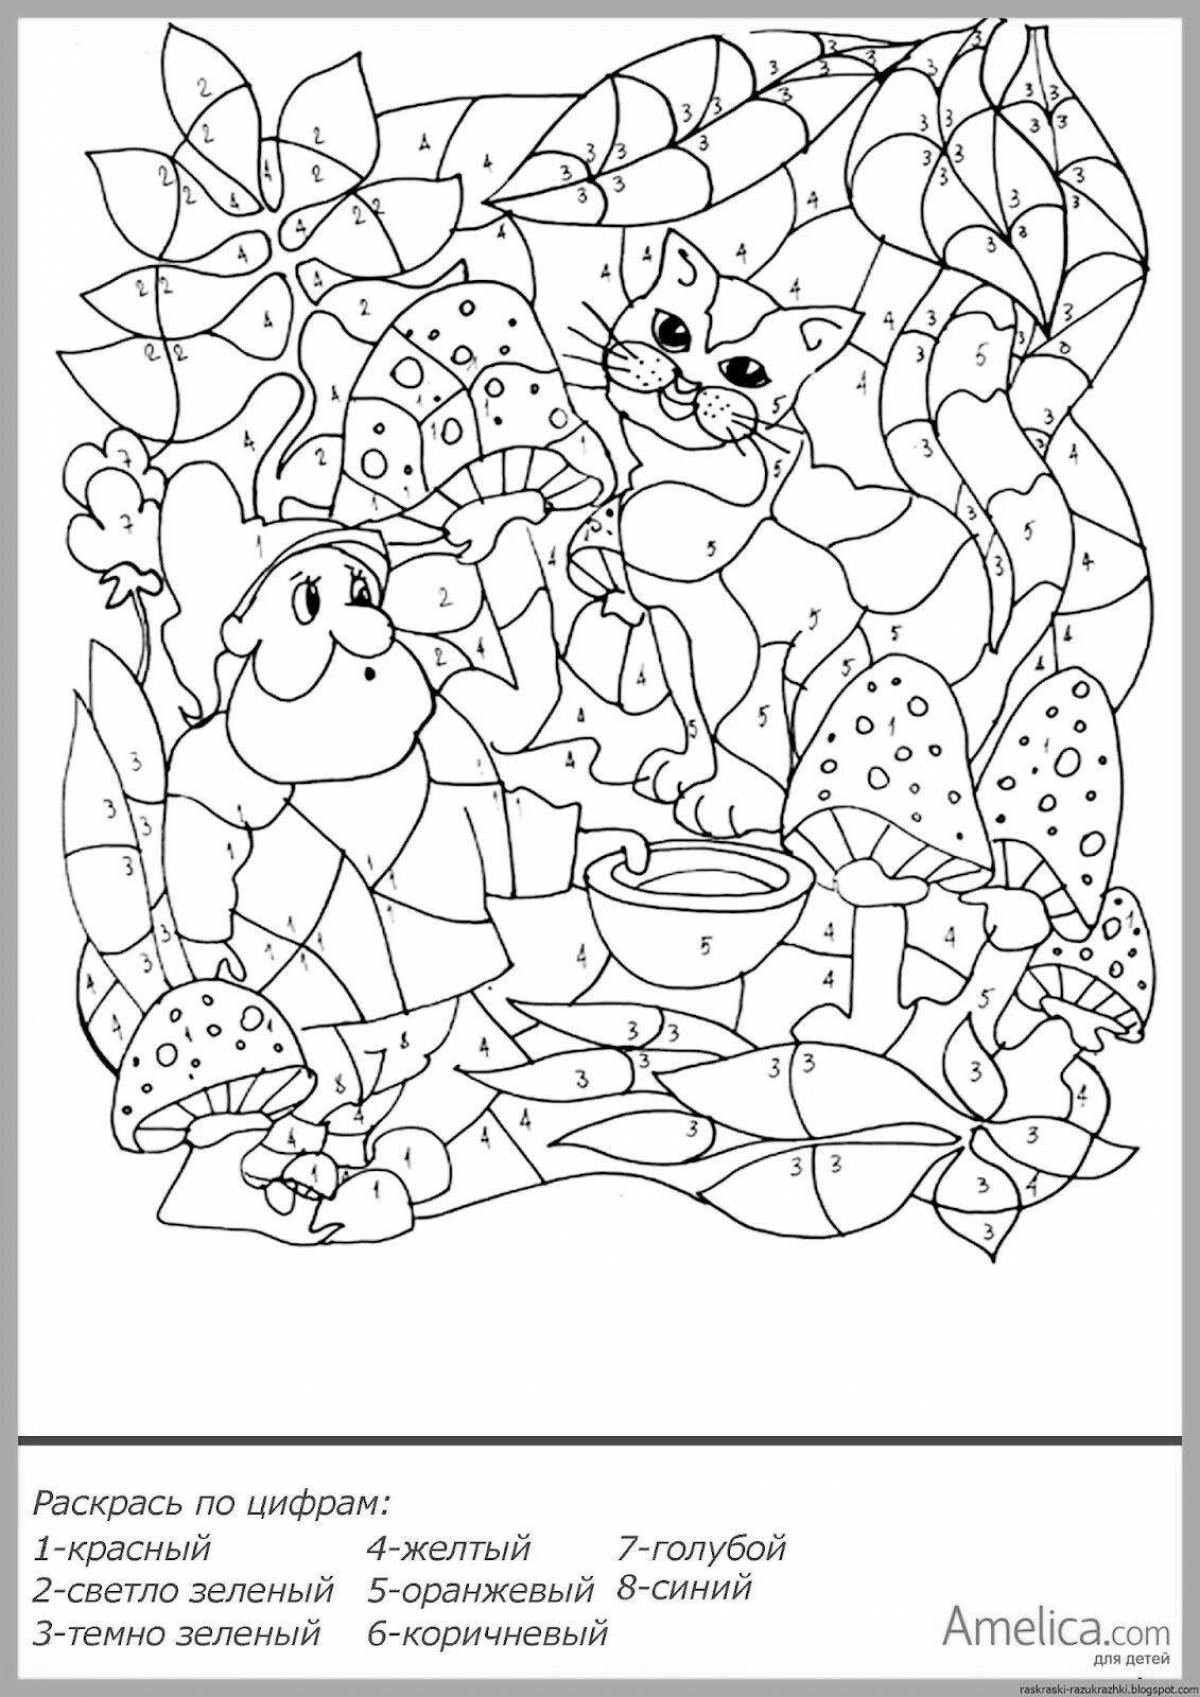 Color-beautiful coloring page digital для детей 6-7 лет